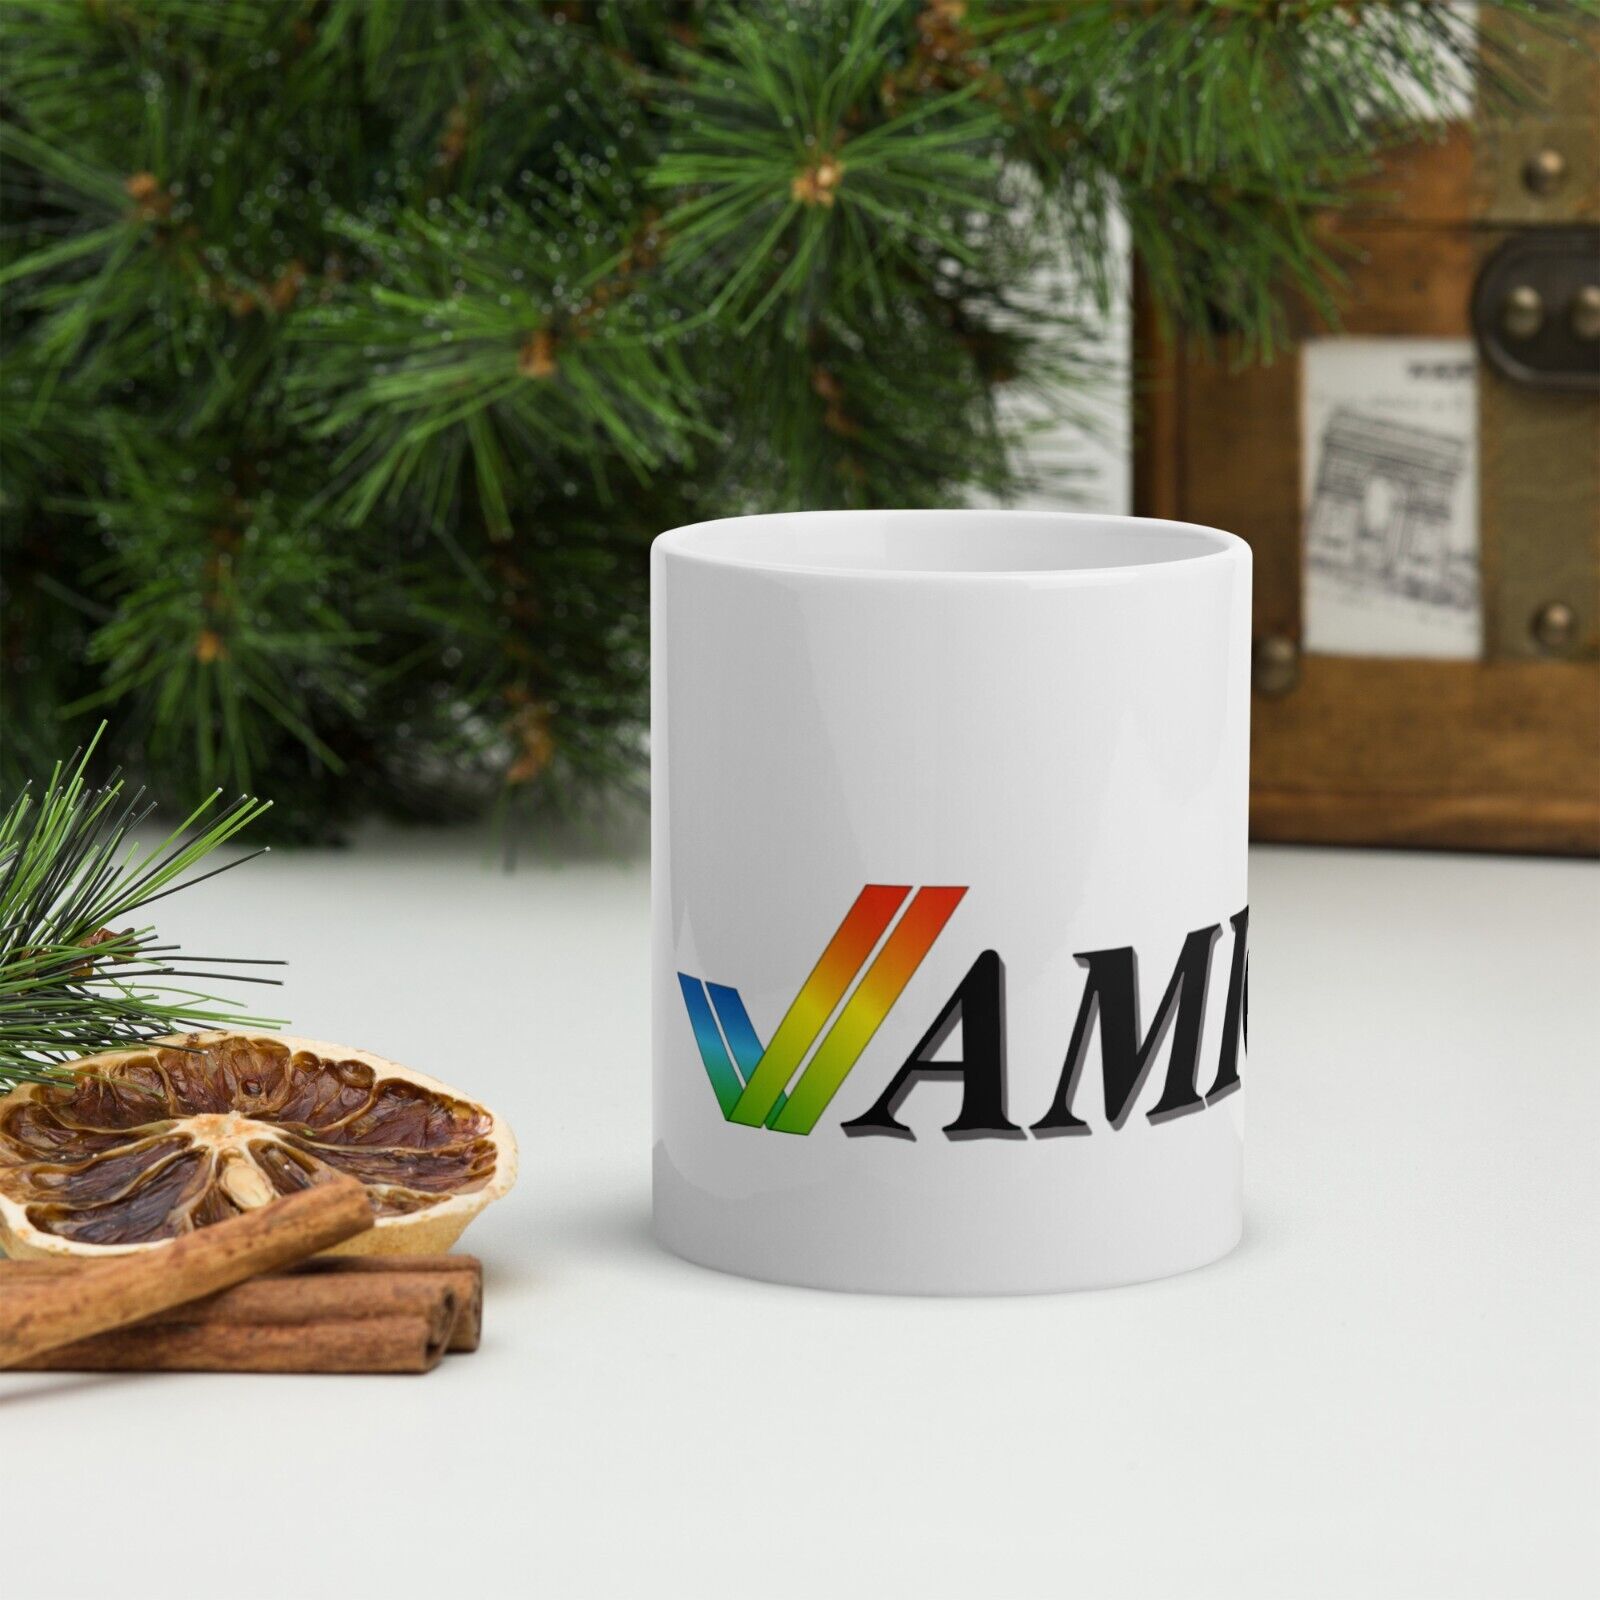 Commodore Amiga Tumbler Mug - 11 Oz Coffee Mug - BEST GIFT FOR AMIGA FAN